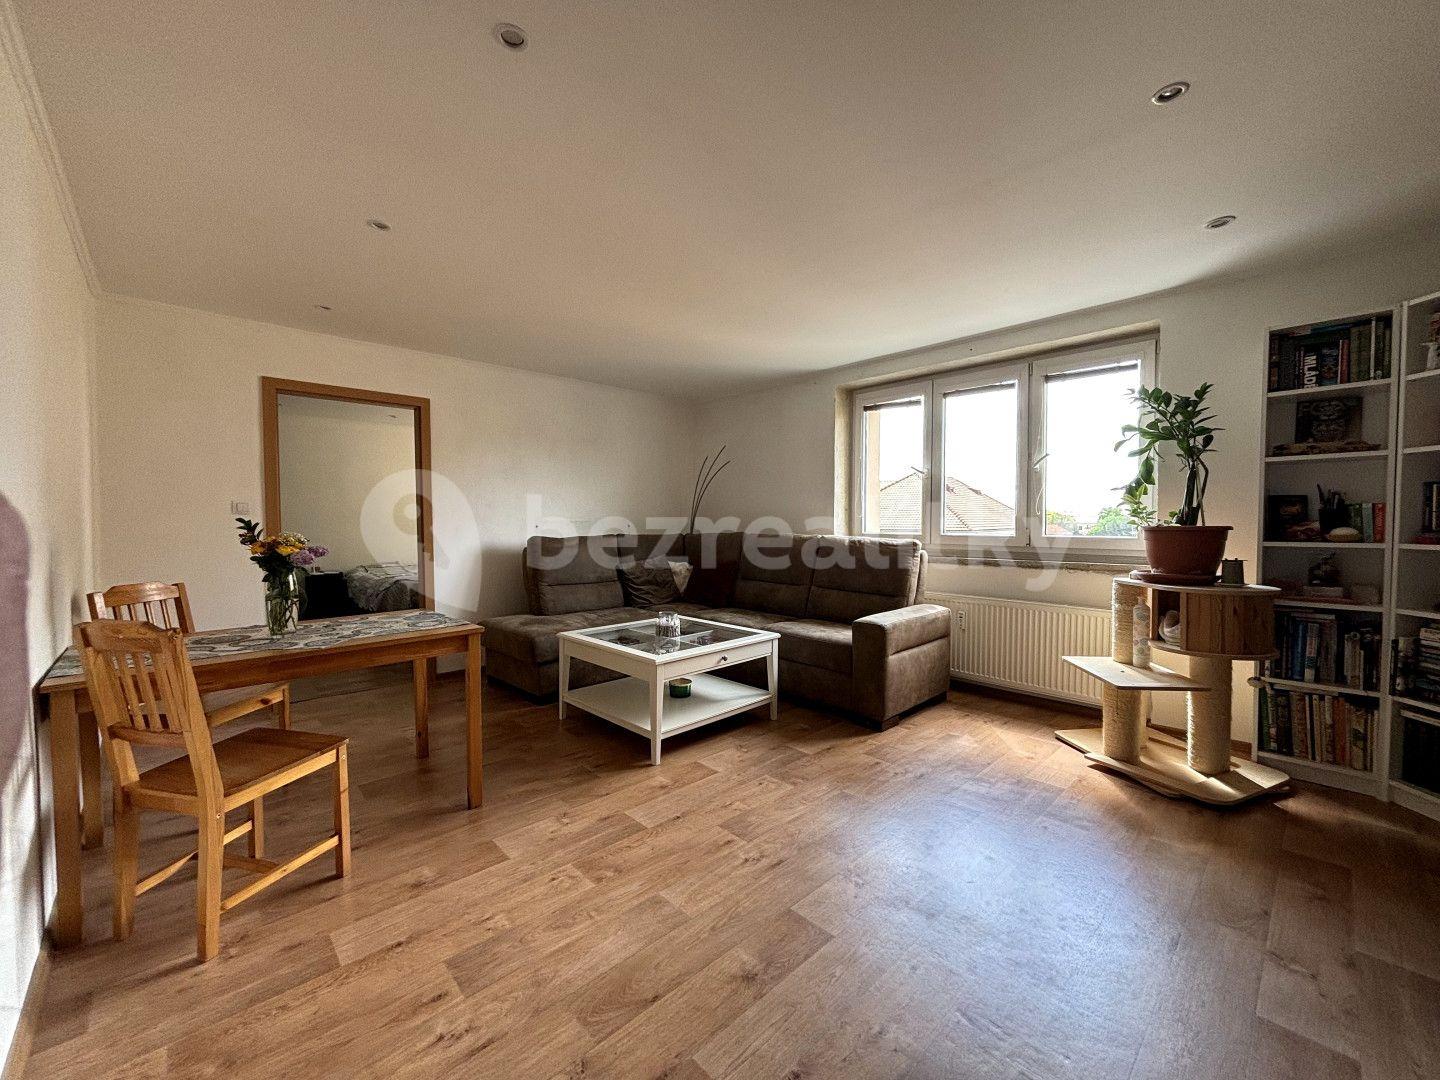 3 bedroom flat for sale, 73 m², Teplická, Litoměřice, Ústecký Region